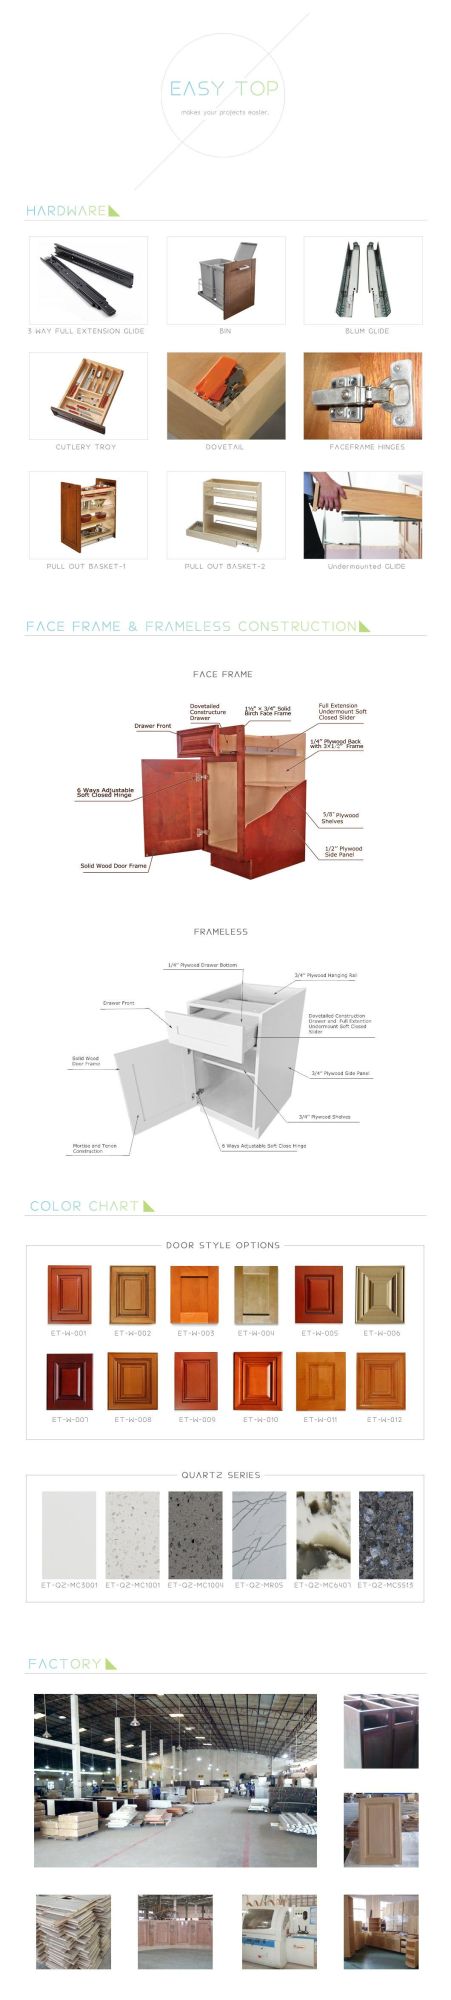 Fashion Popular Furniture Australia Designs Solid Wood Wooden Kitchen Cabinet